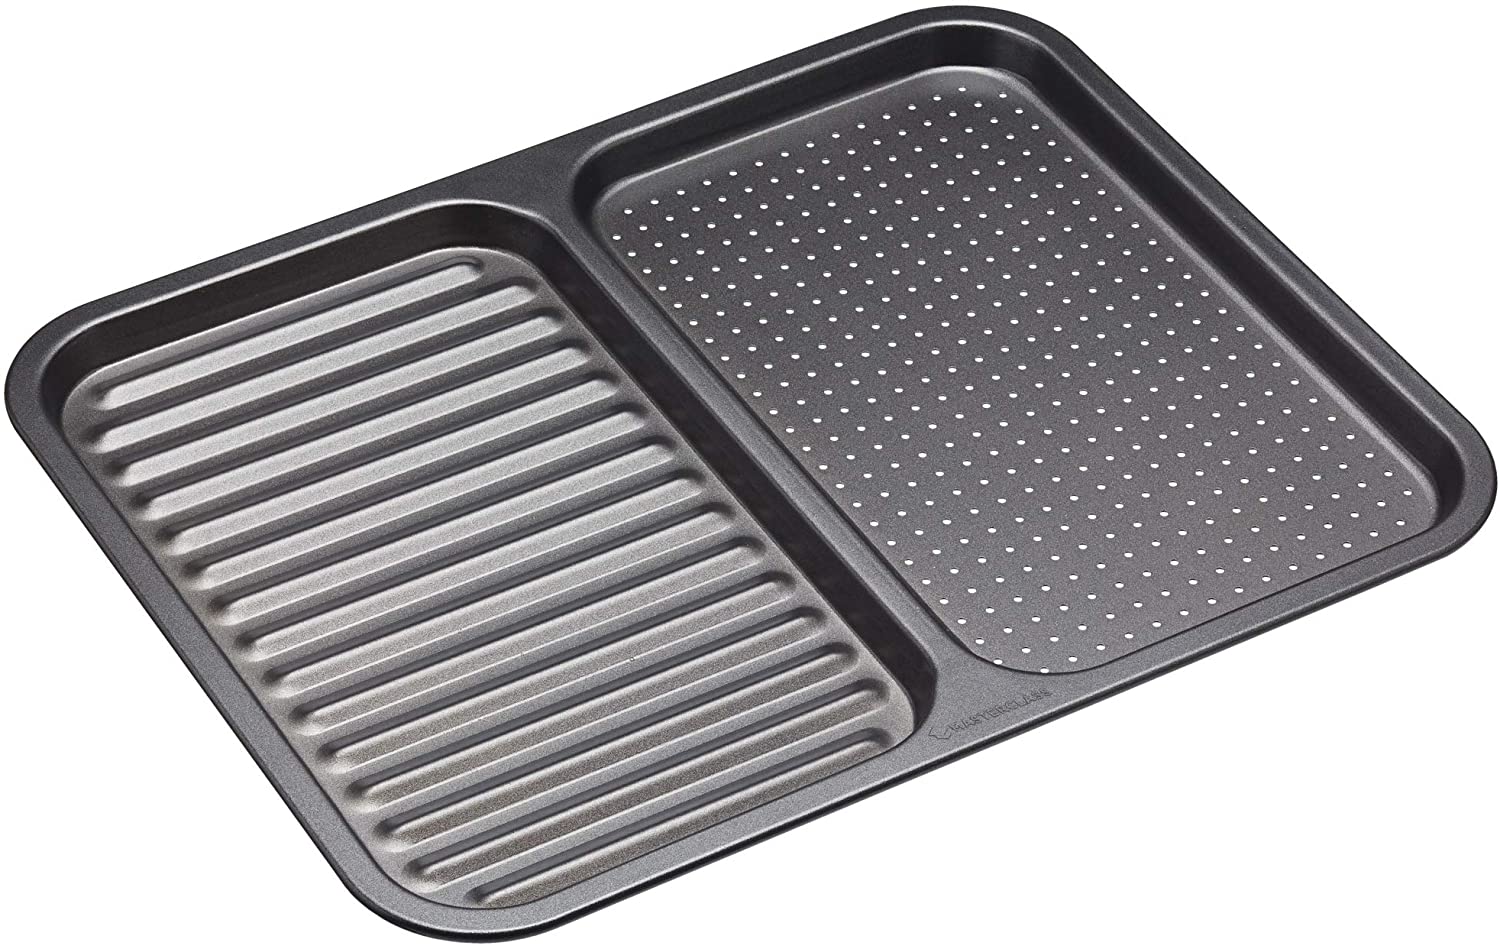 Masterclass Master Class Baking Tray, 39 cm x 31 cm, Carbon Steel, Grey, 28 cm x 18 cm x 18 cm